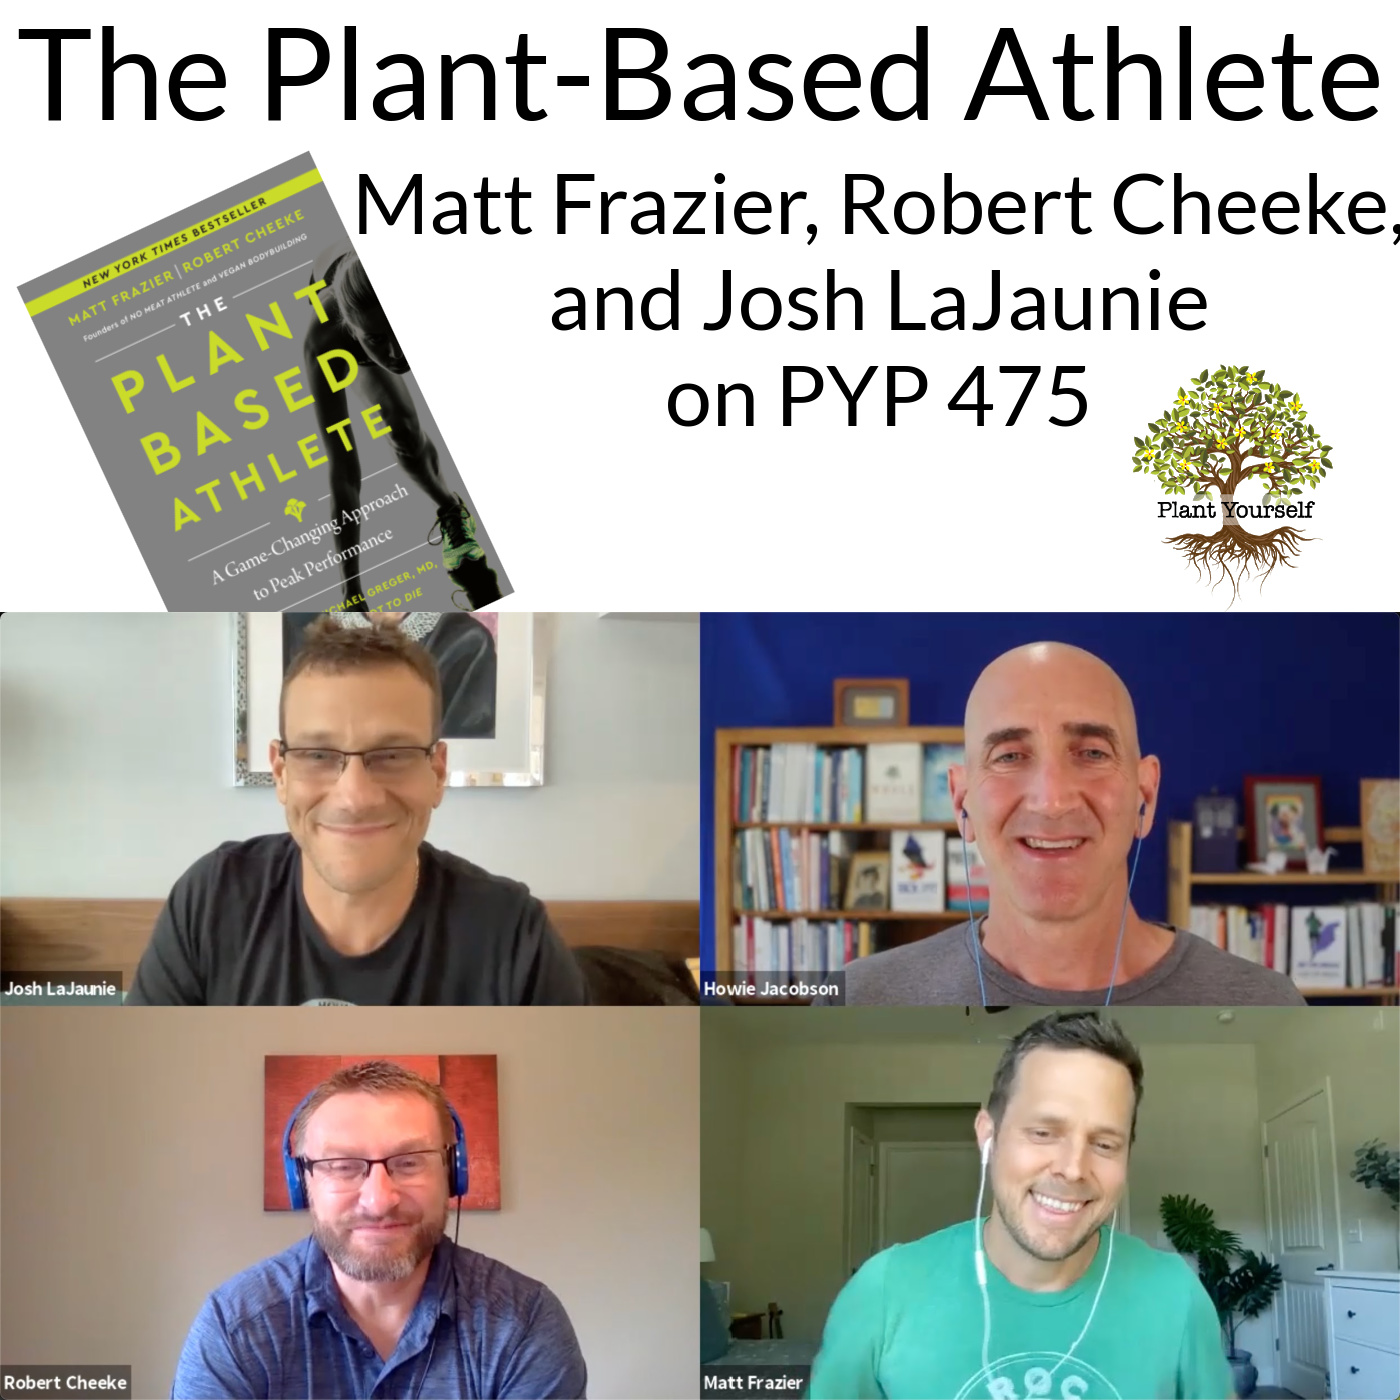 The Plant-Based Athlete: Matt Frazier, Robert Cheeke, and Josh LaJaunie on PYP 475